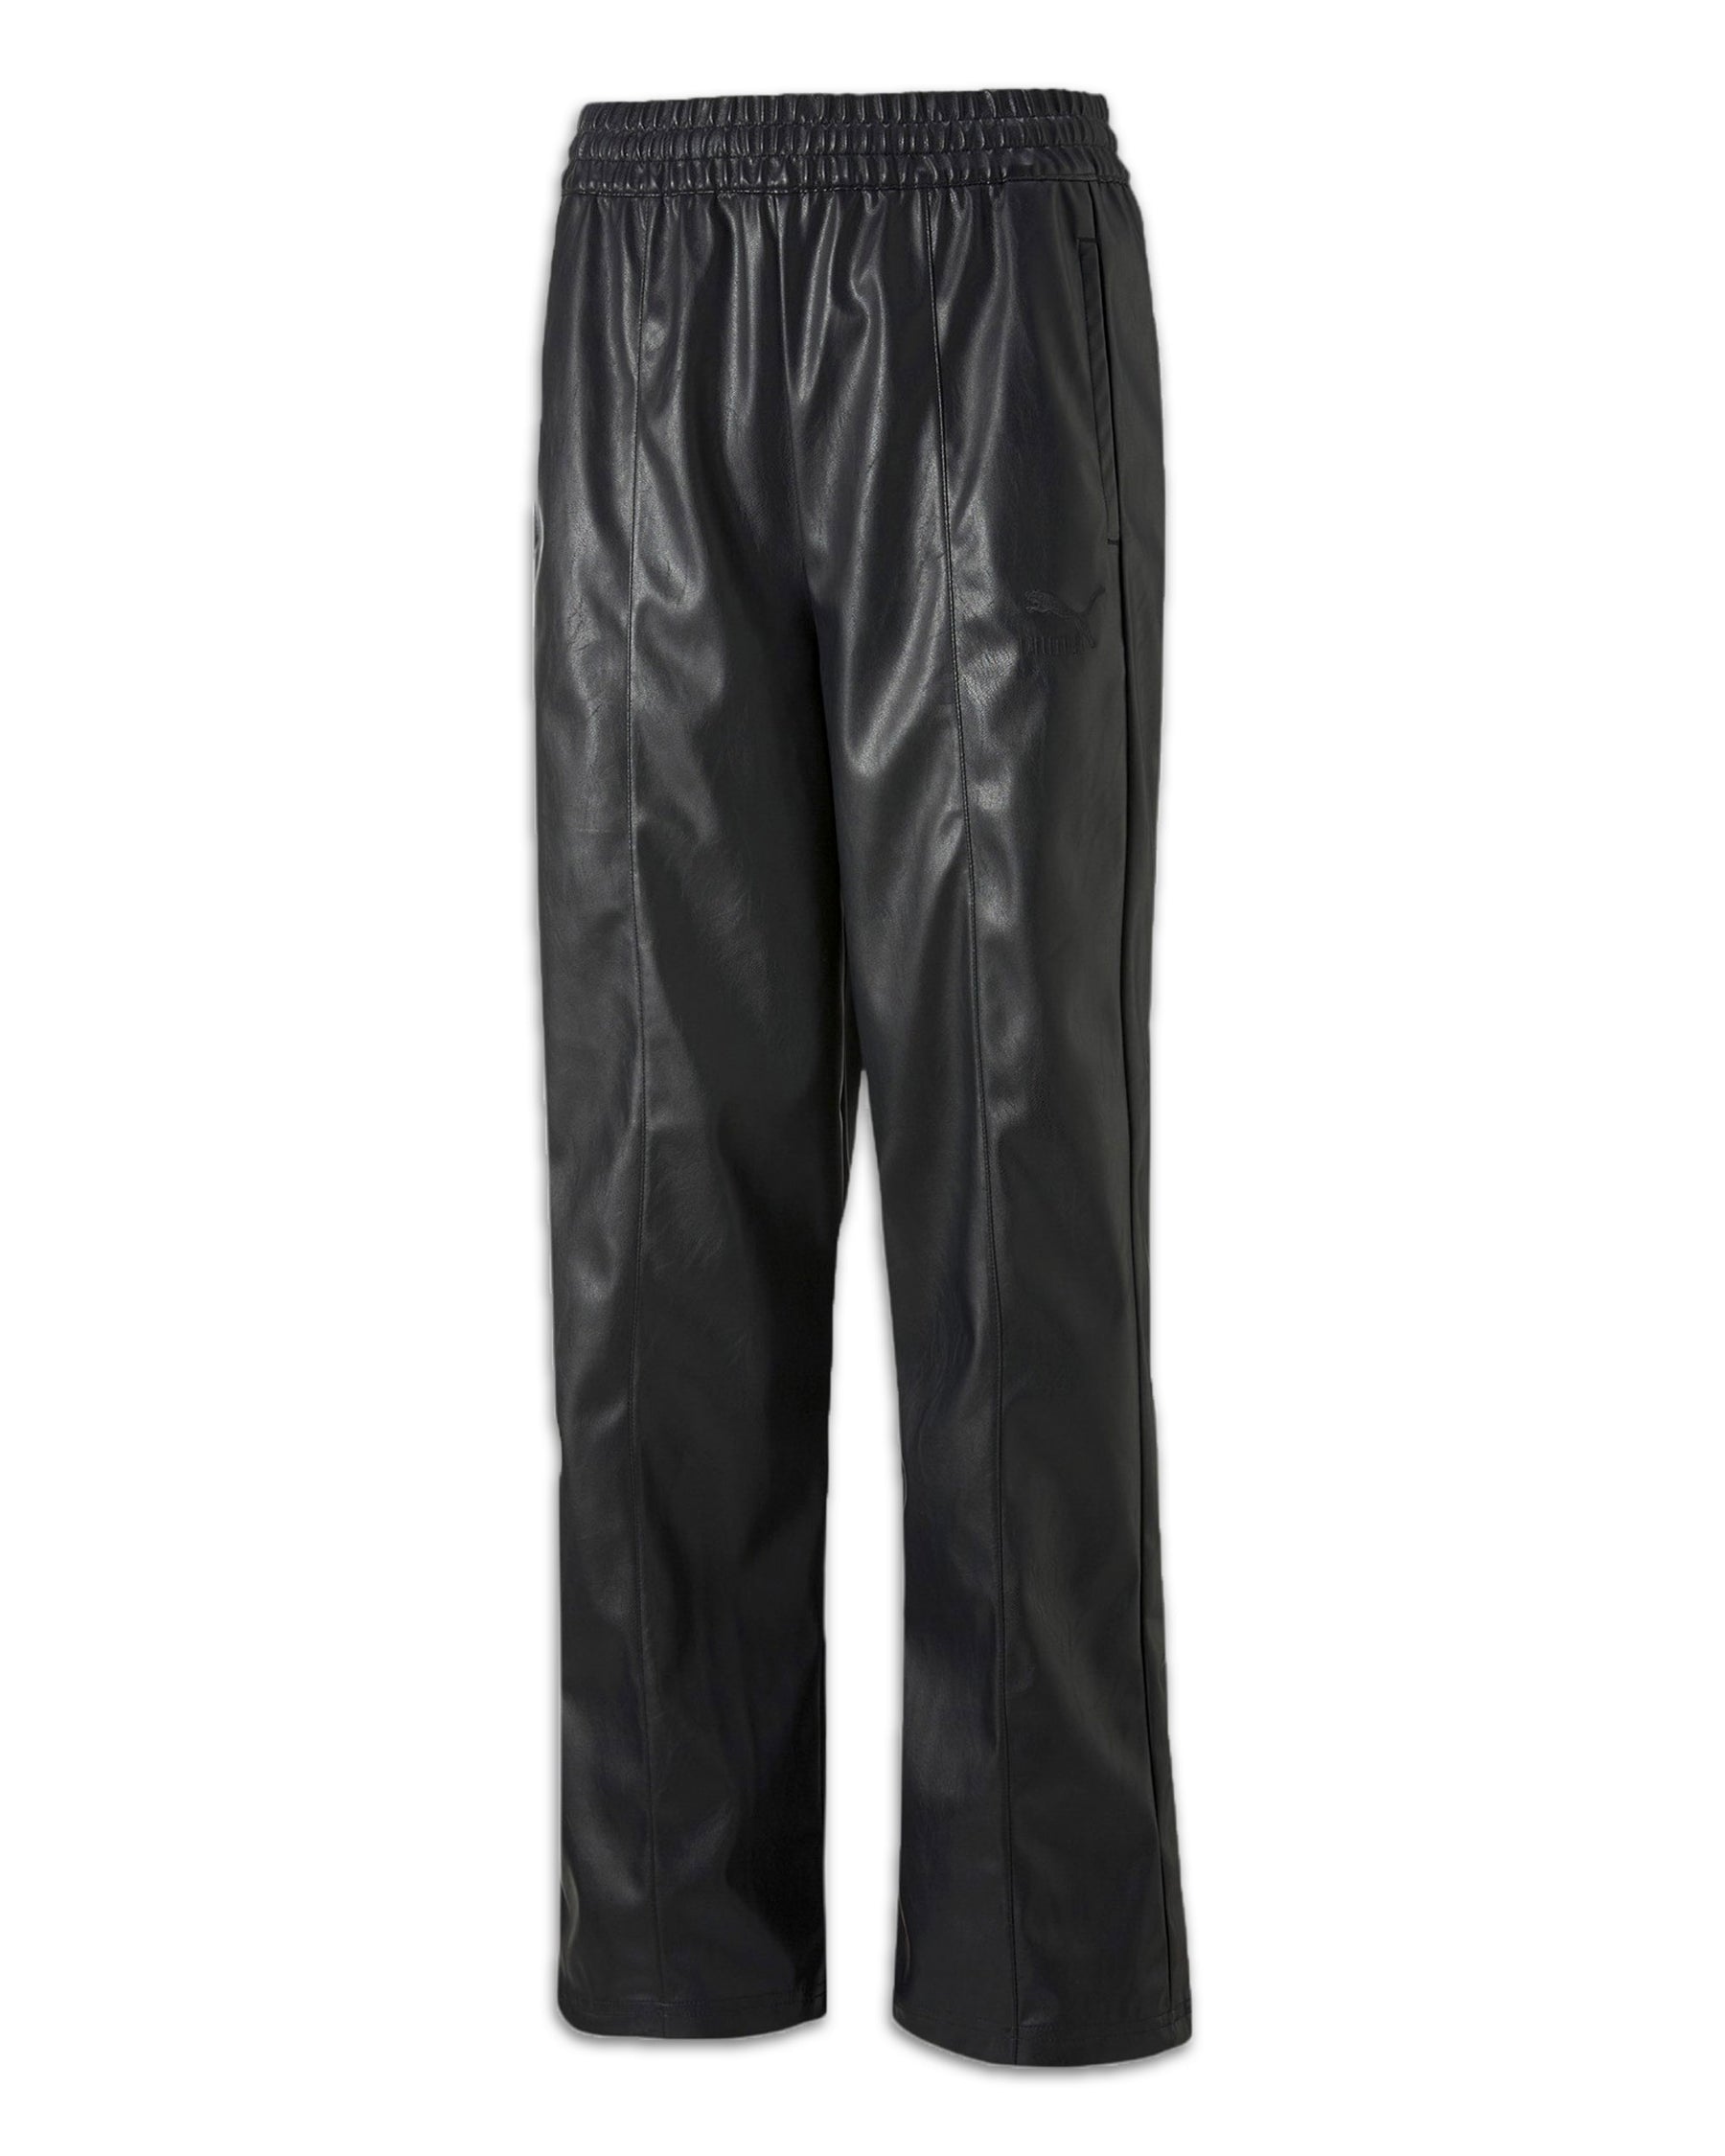 Pantalone Donna Puma T7 Faux Leather Nero